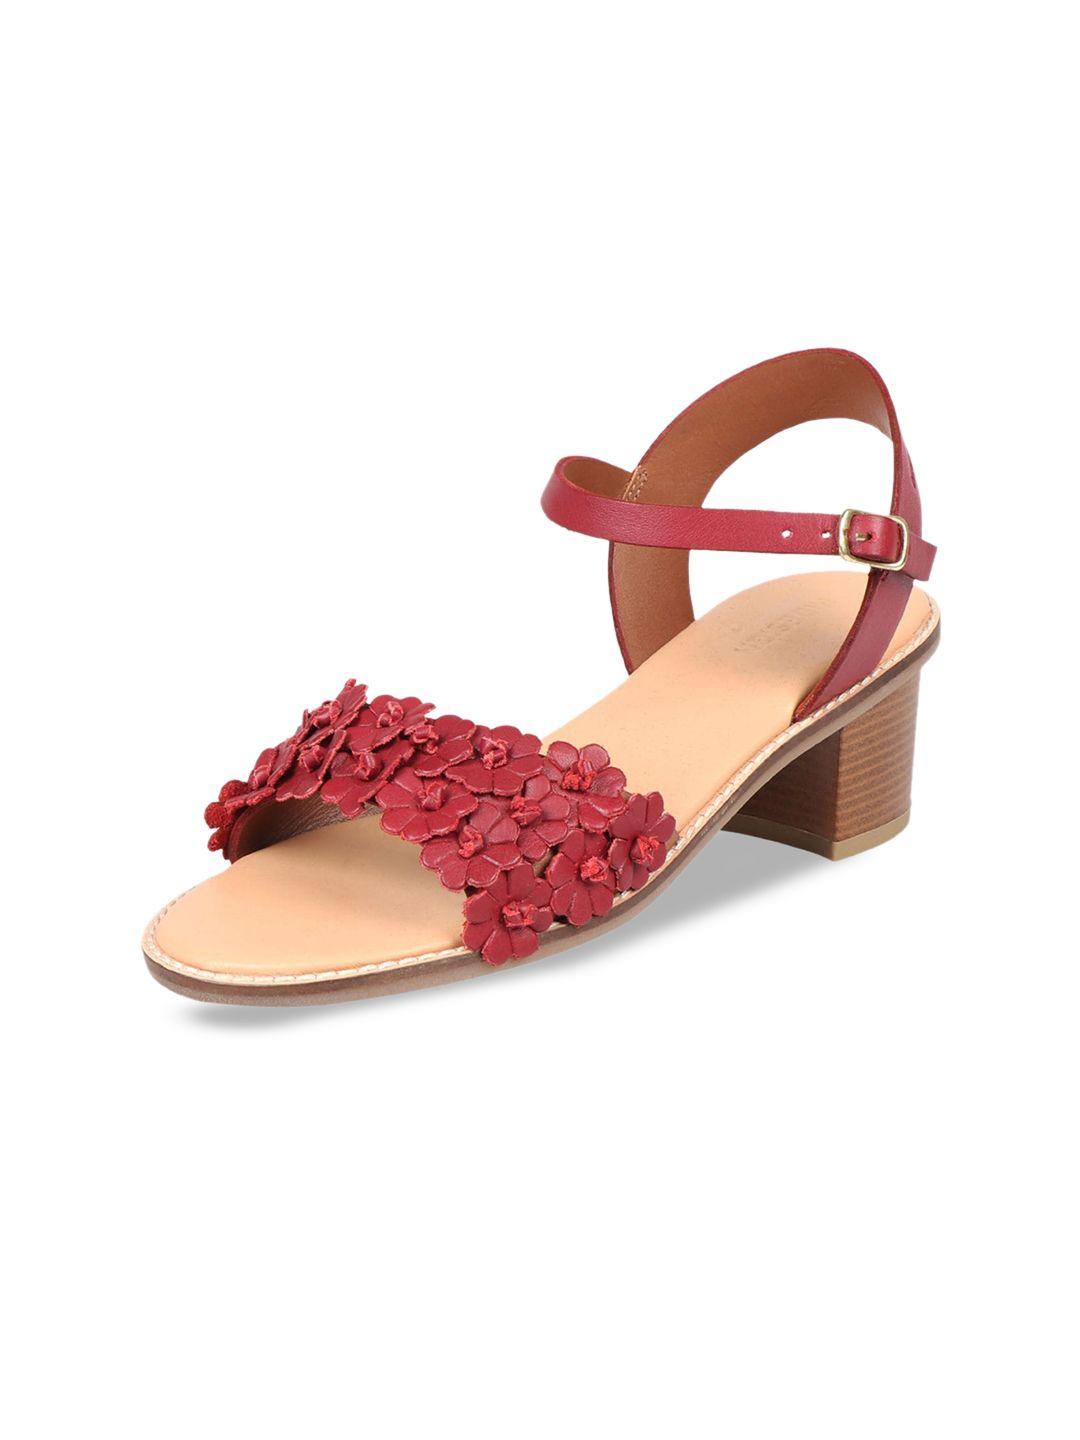 hidesign aretha embellished leather block heels